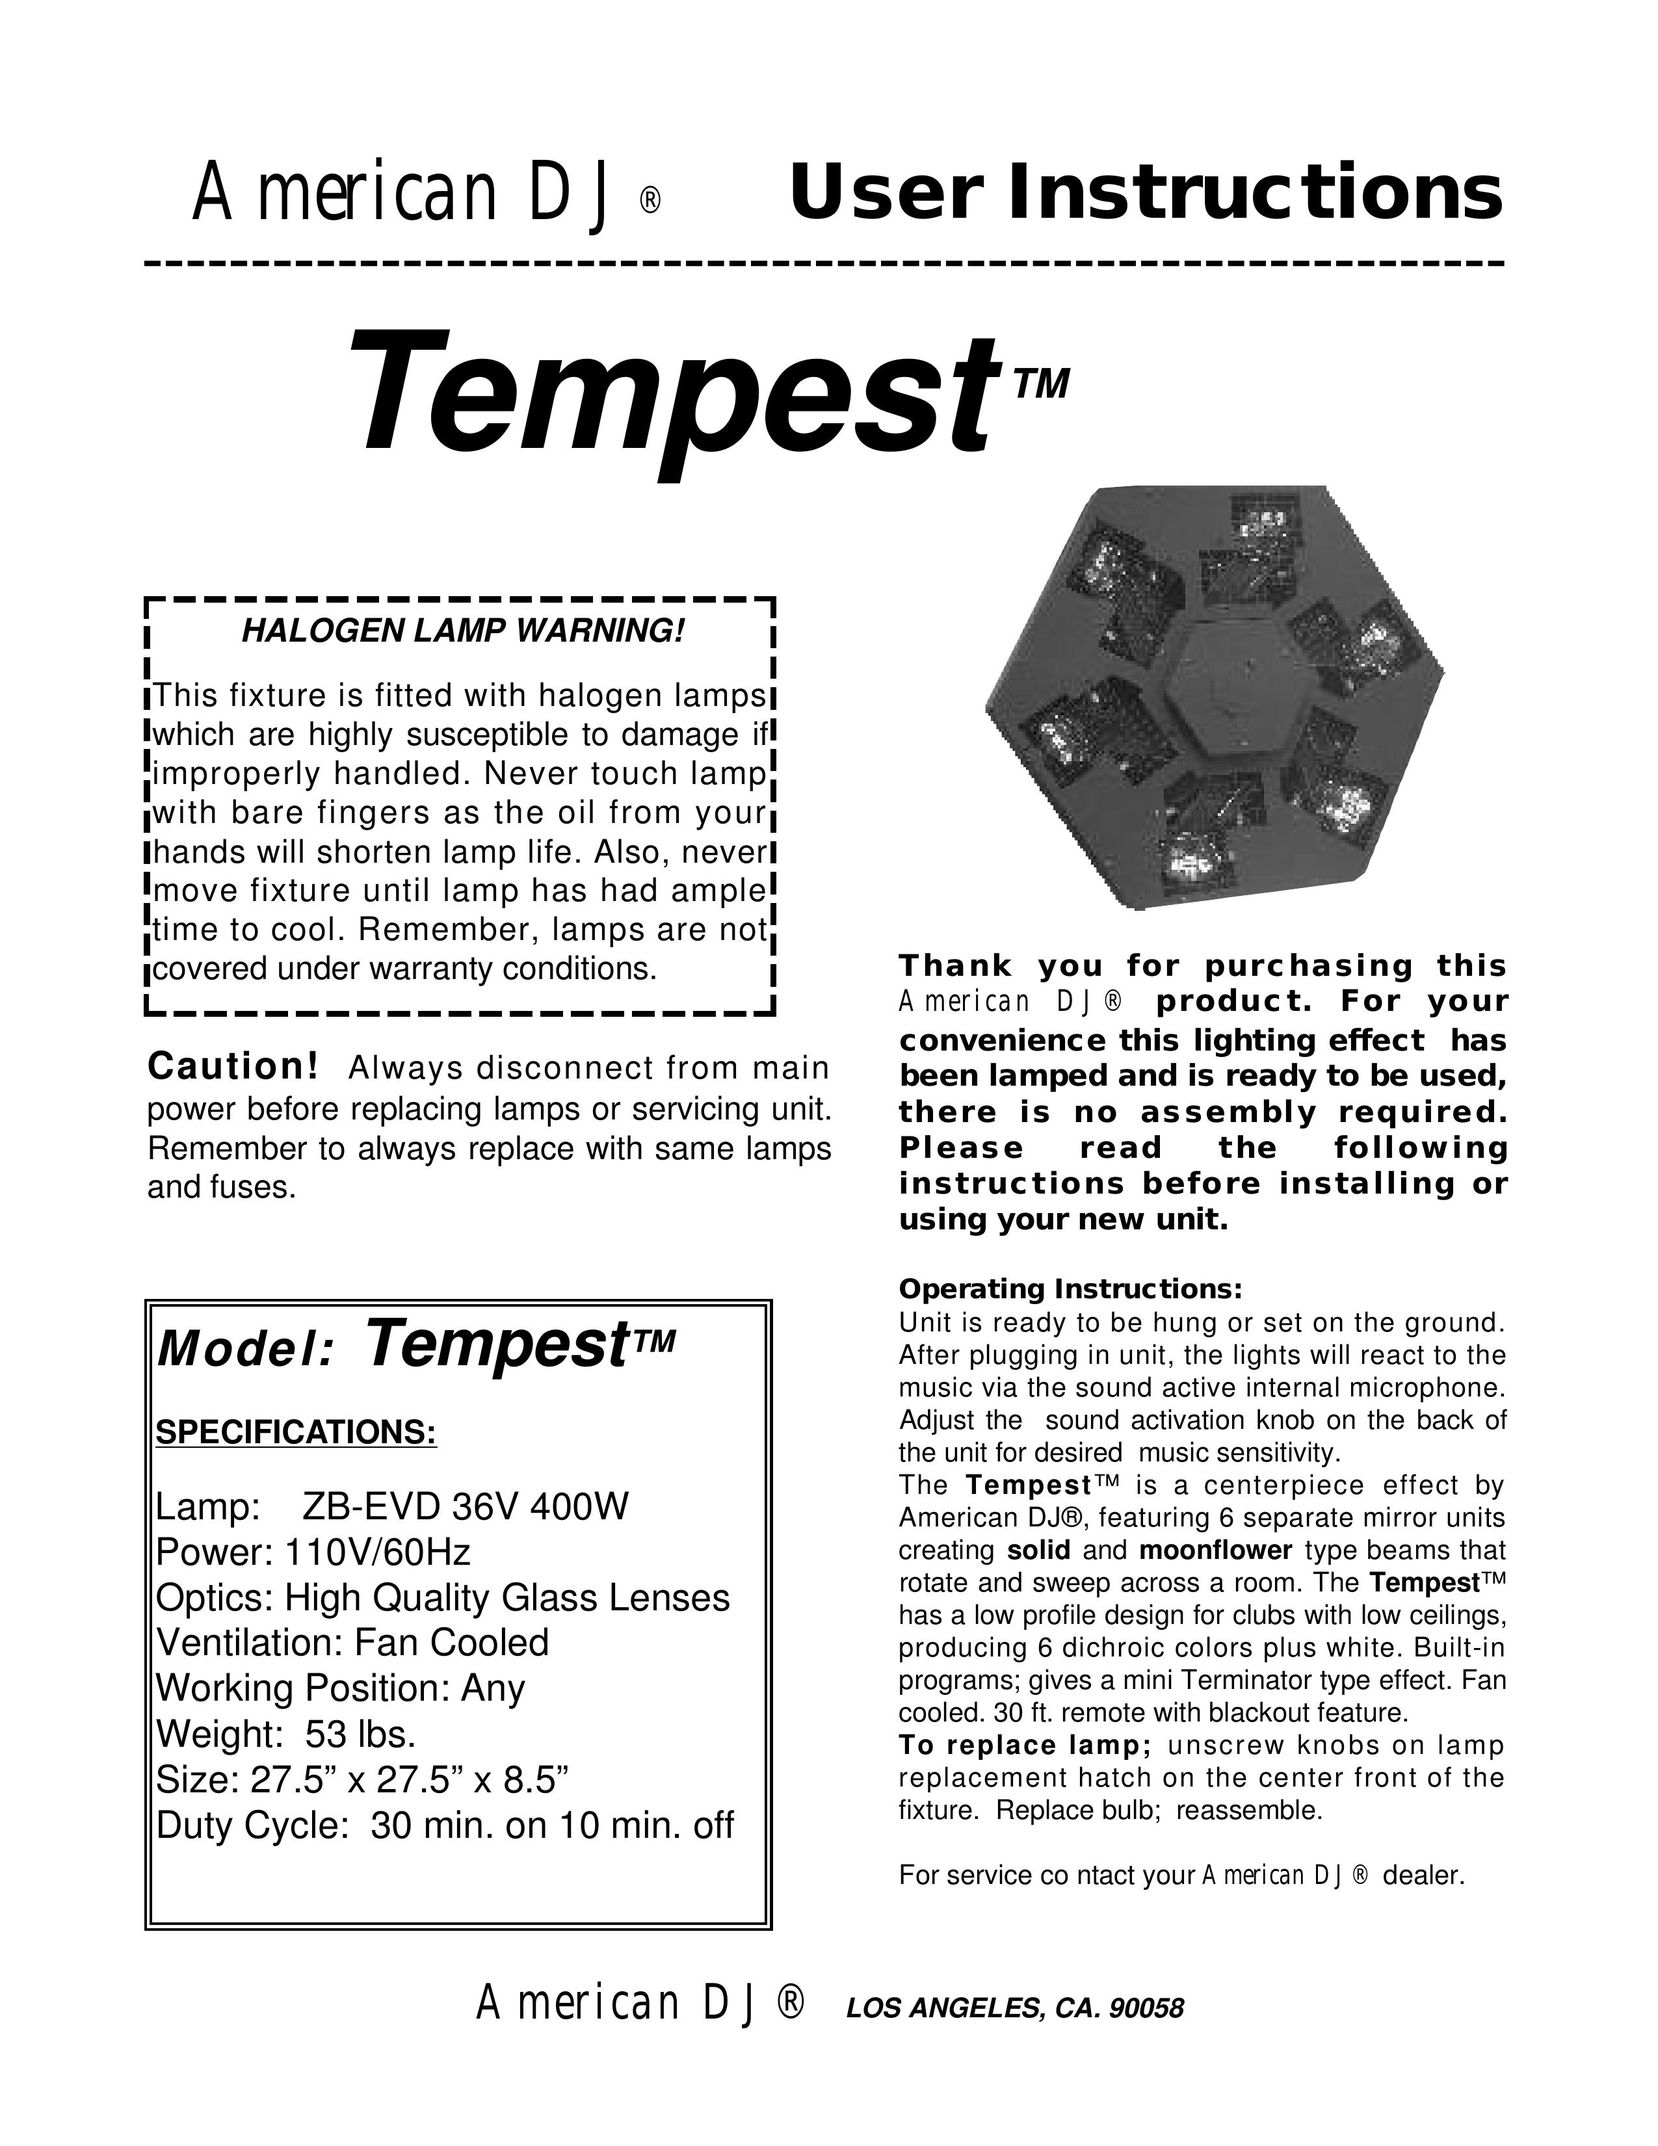 American DJ Tempest Indoor Furnishings User Manual